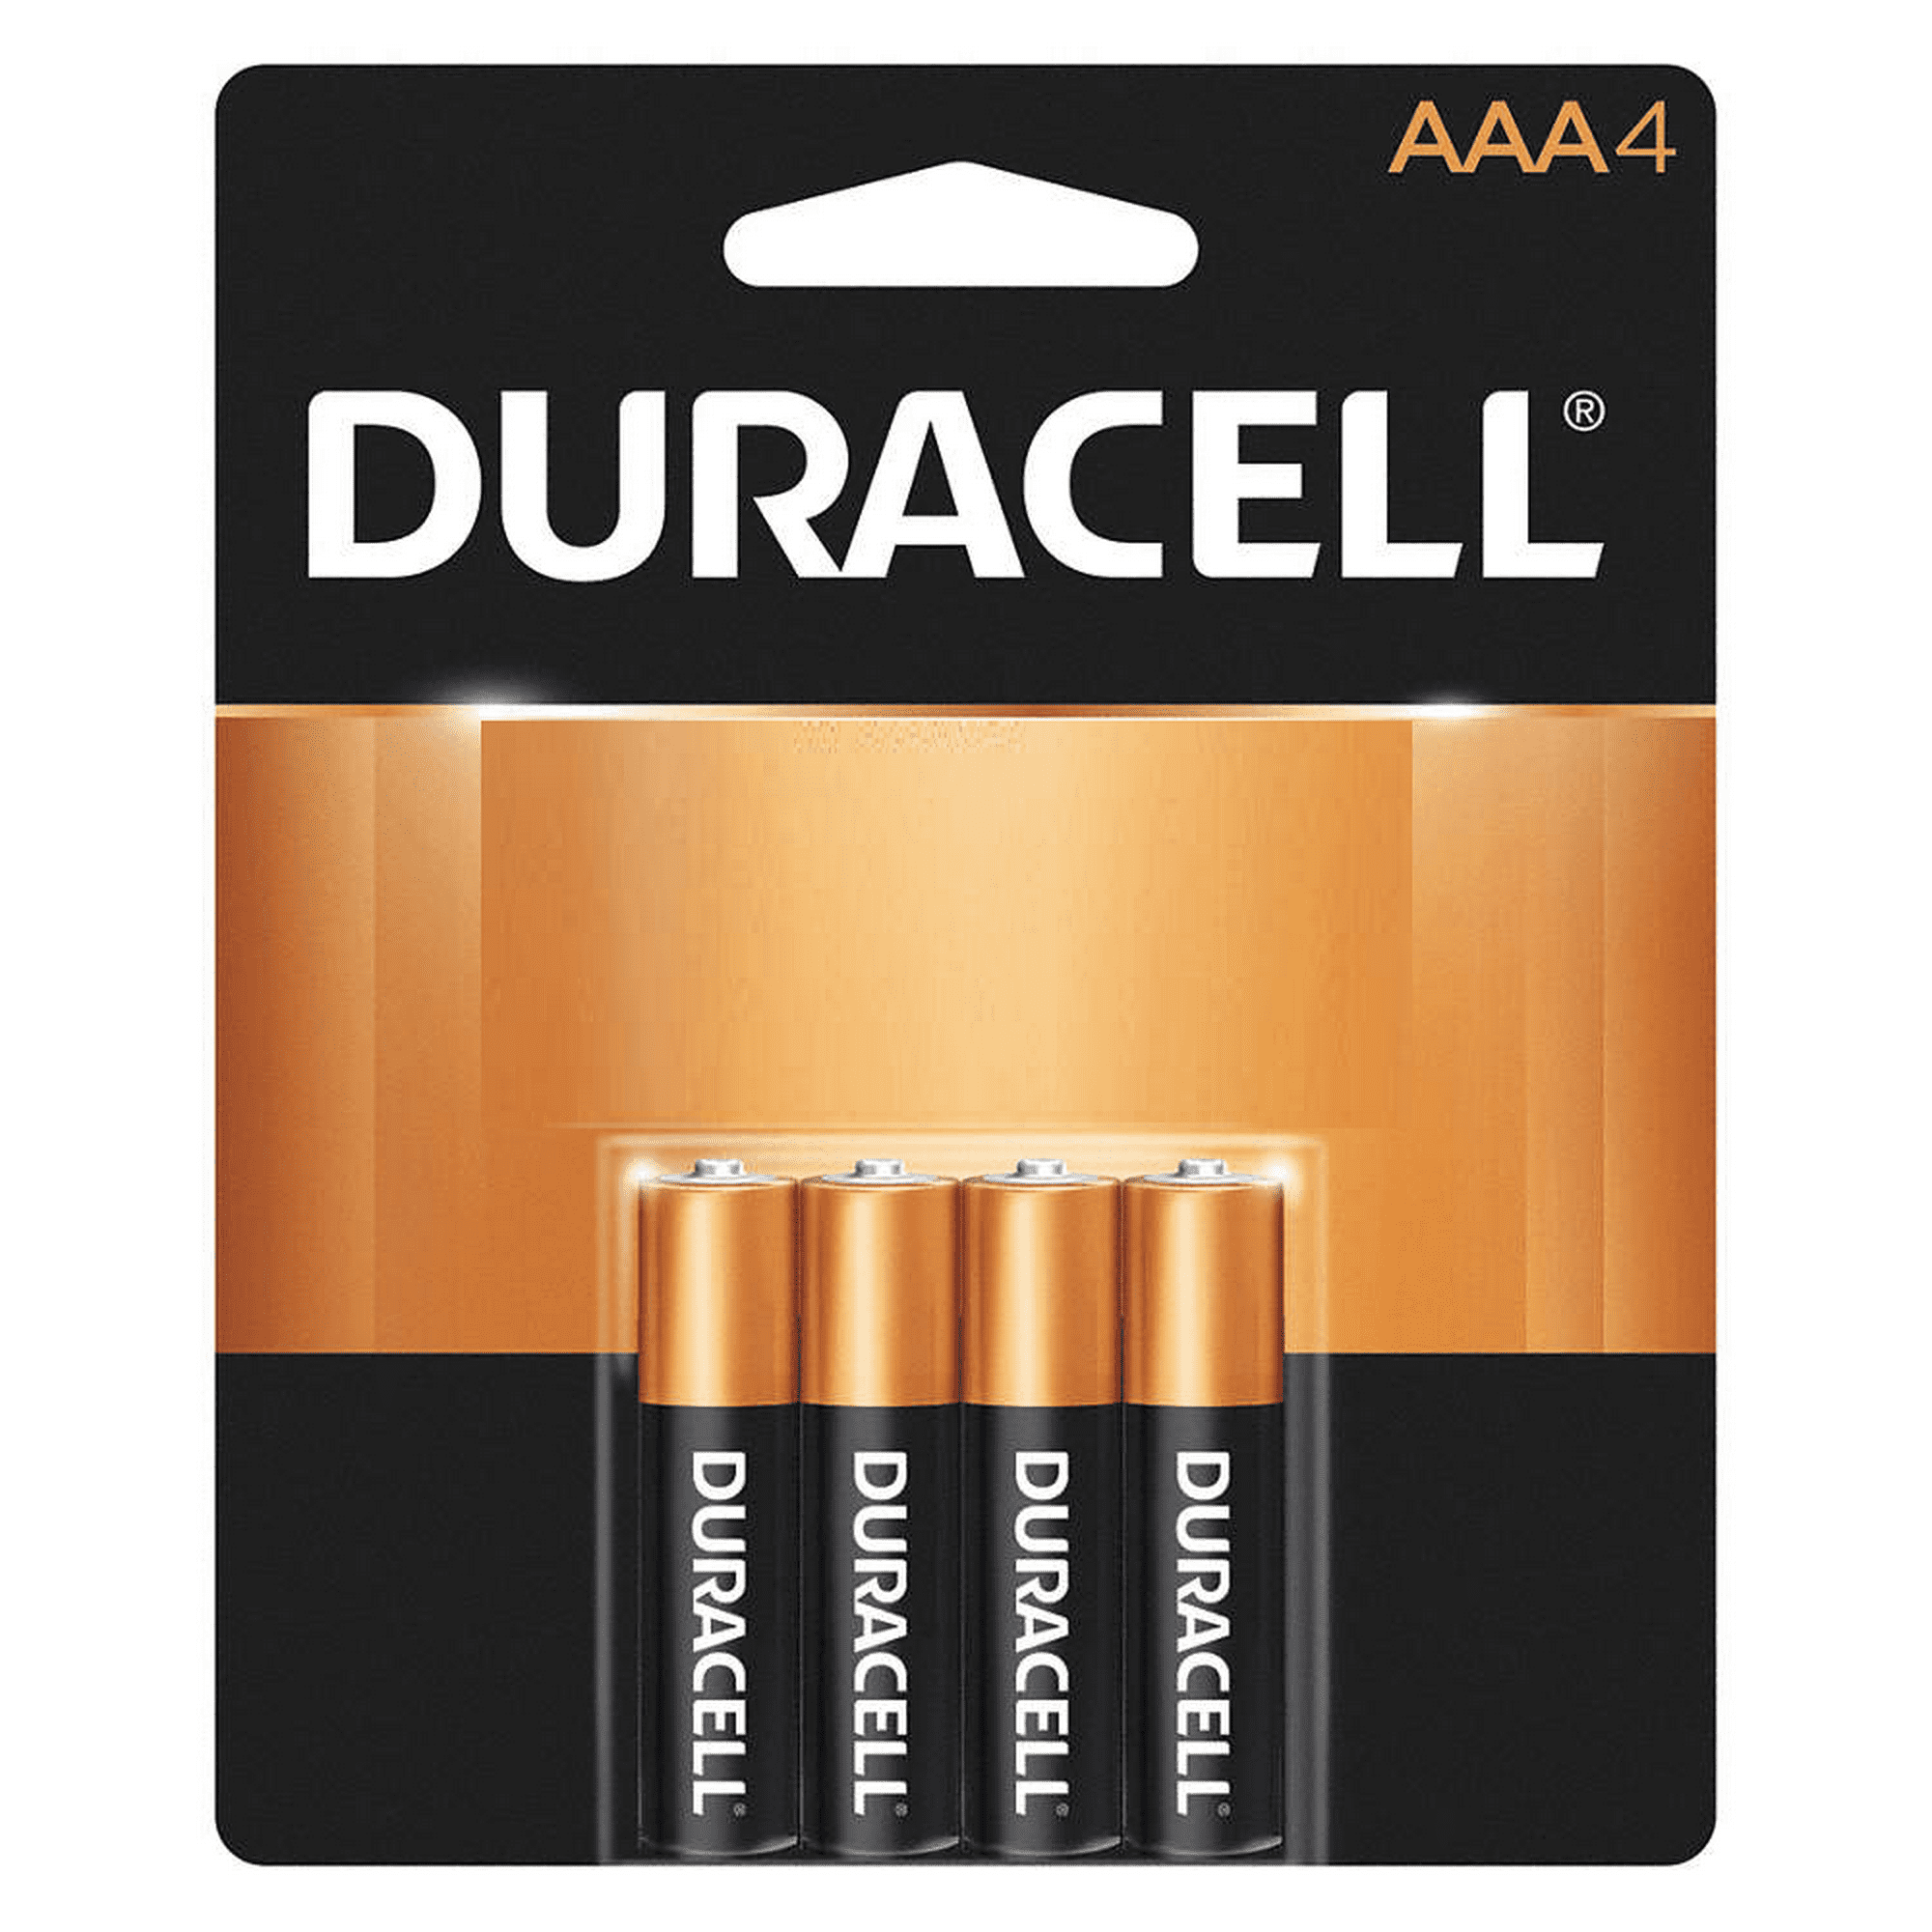 Pilas duracell aaa pack de 4 piezas alcalinas 1.5 v duracell mn2400